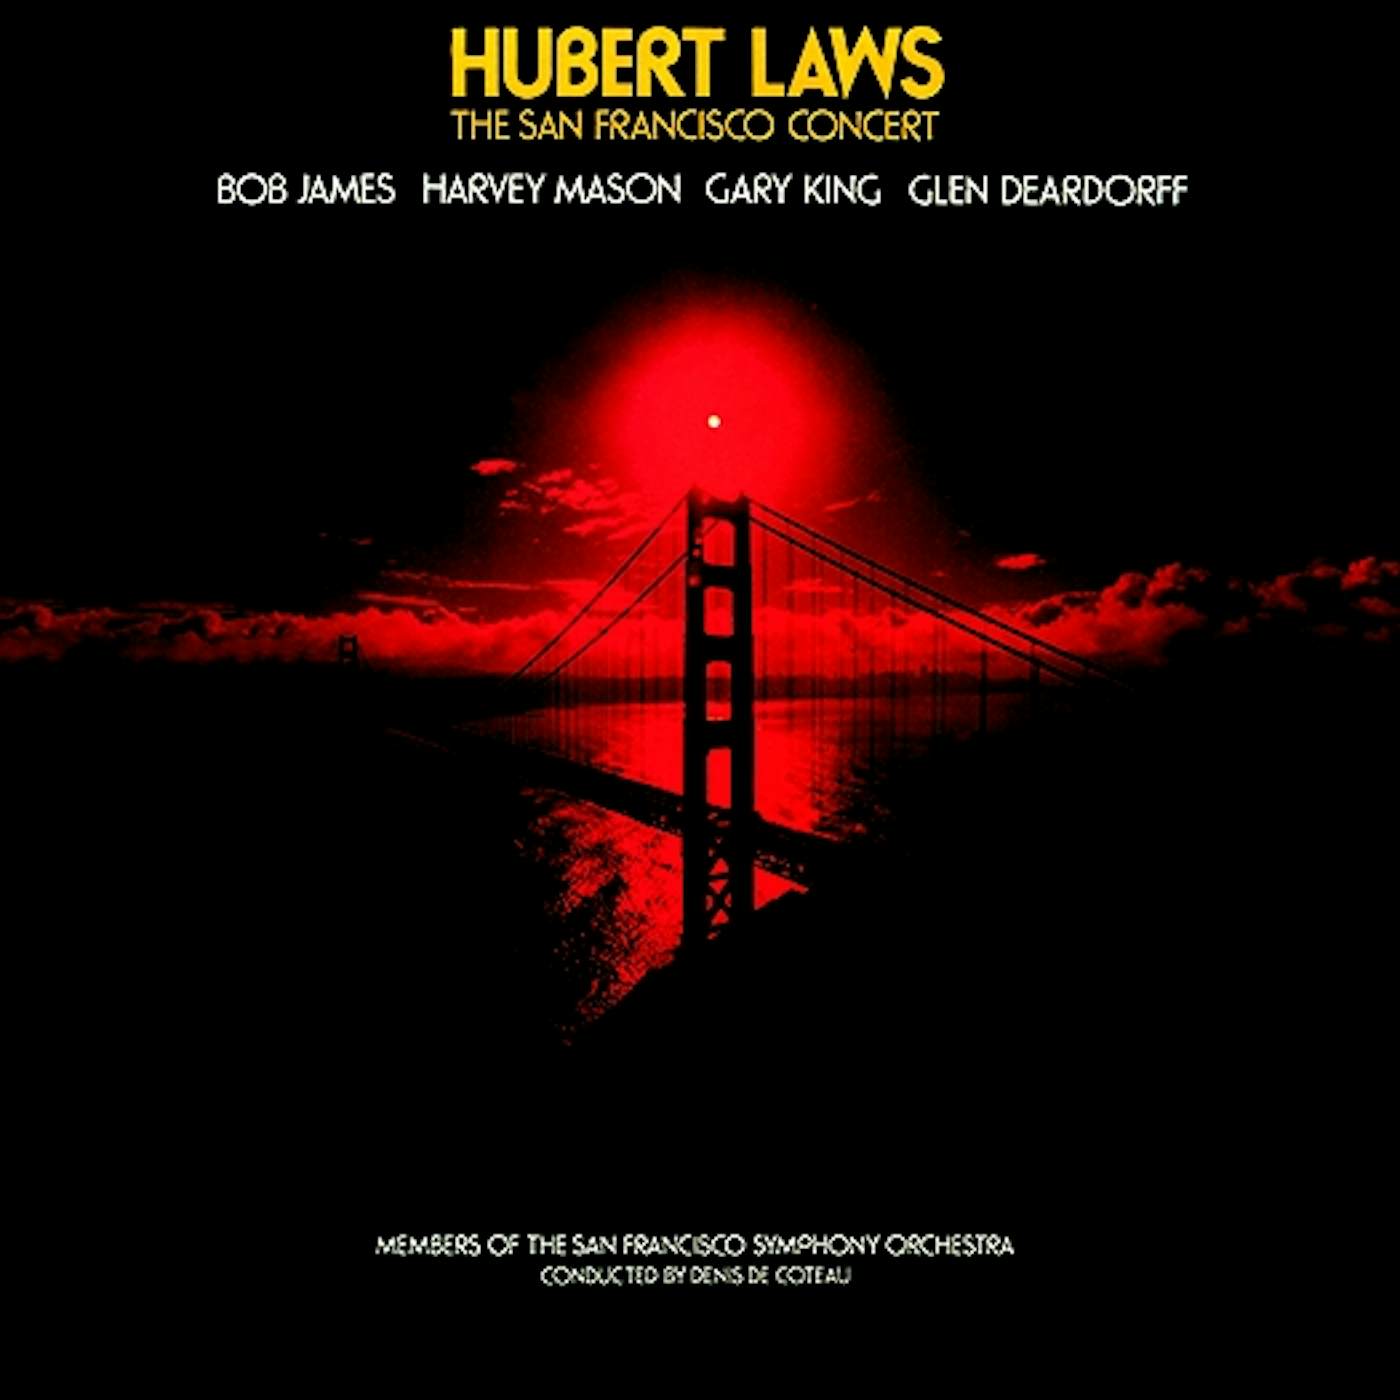 Hubert Laws SAN FRANCISCO CONCERT CD